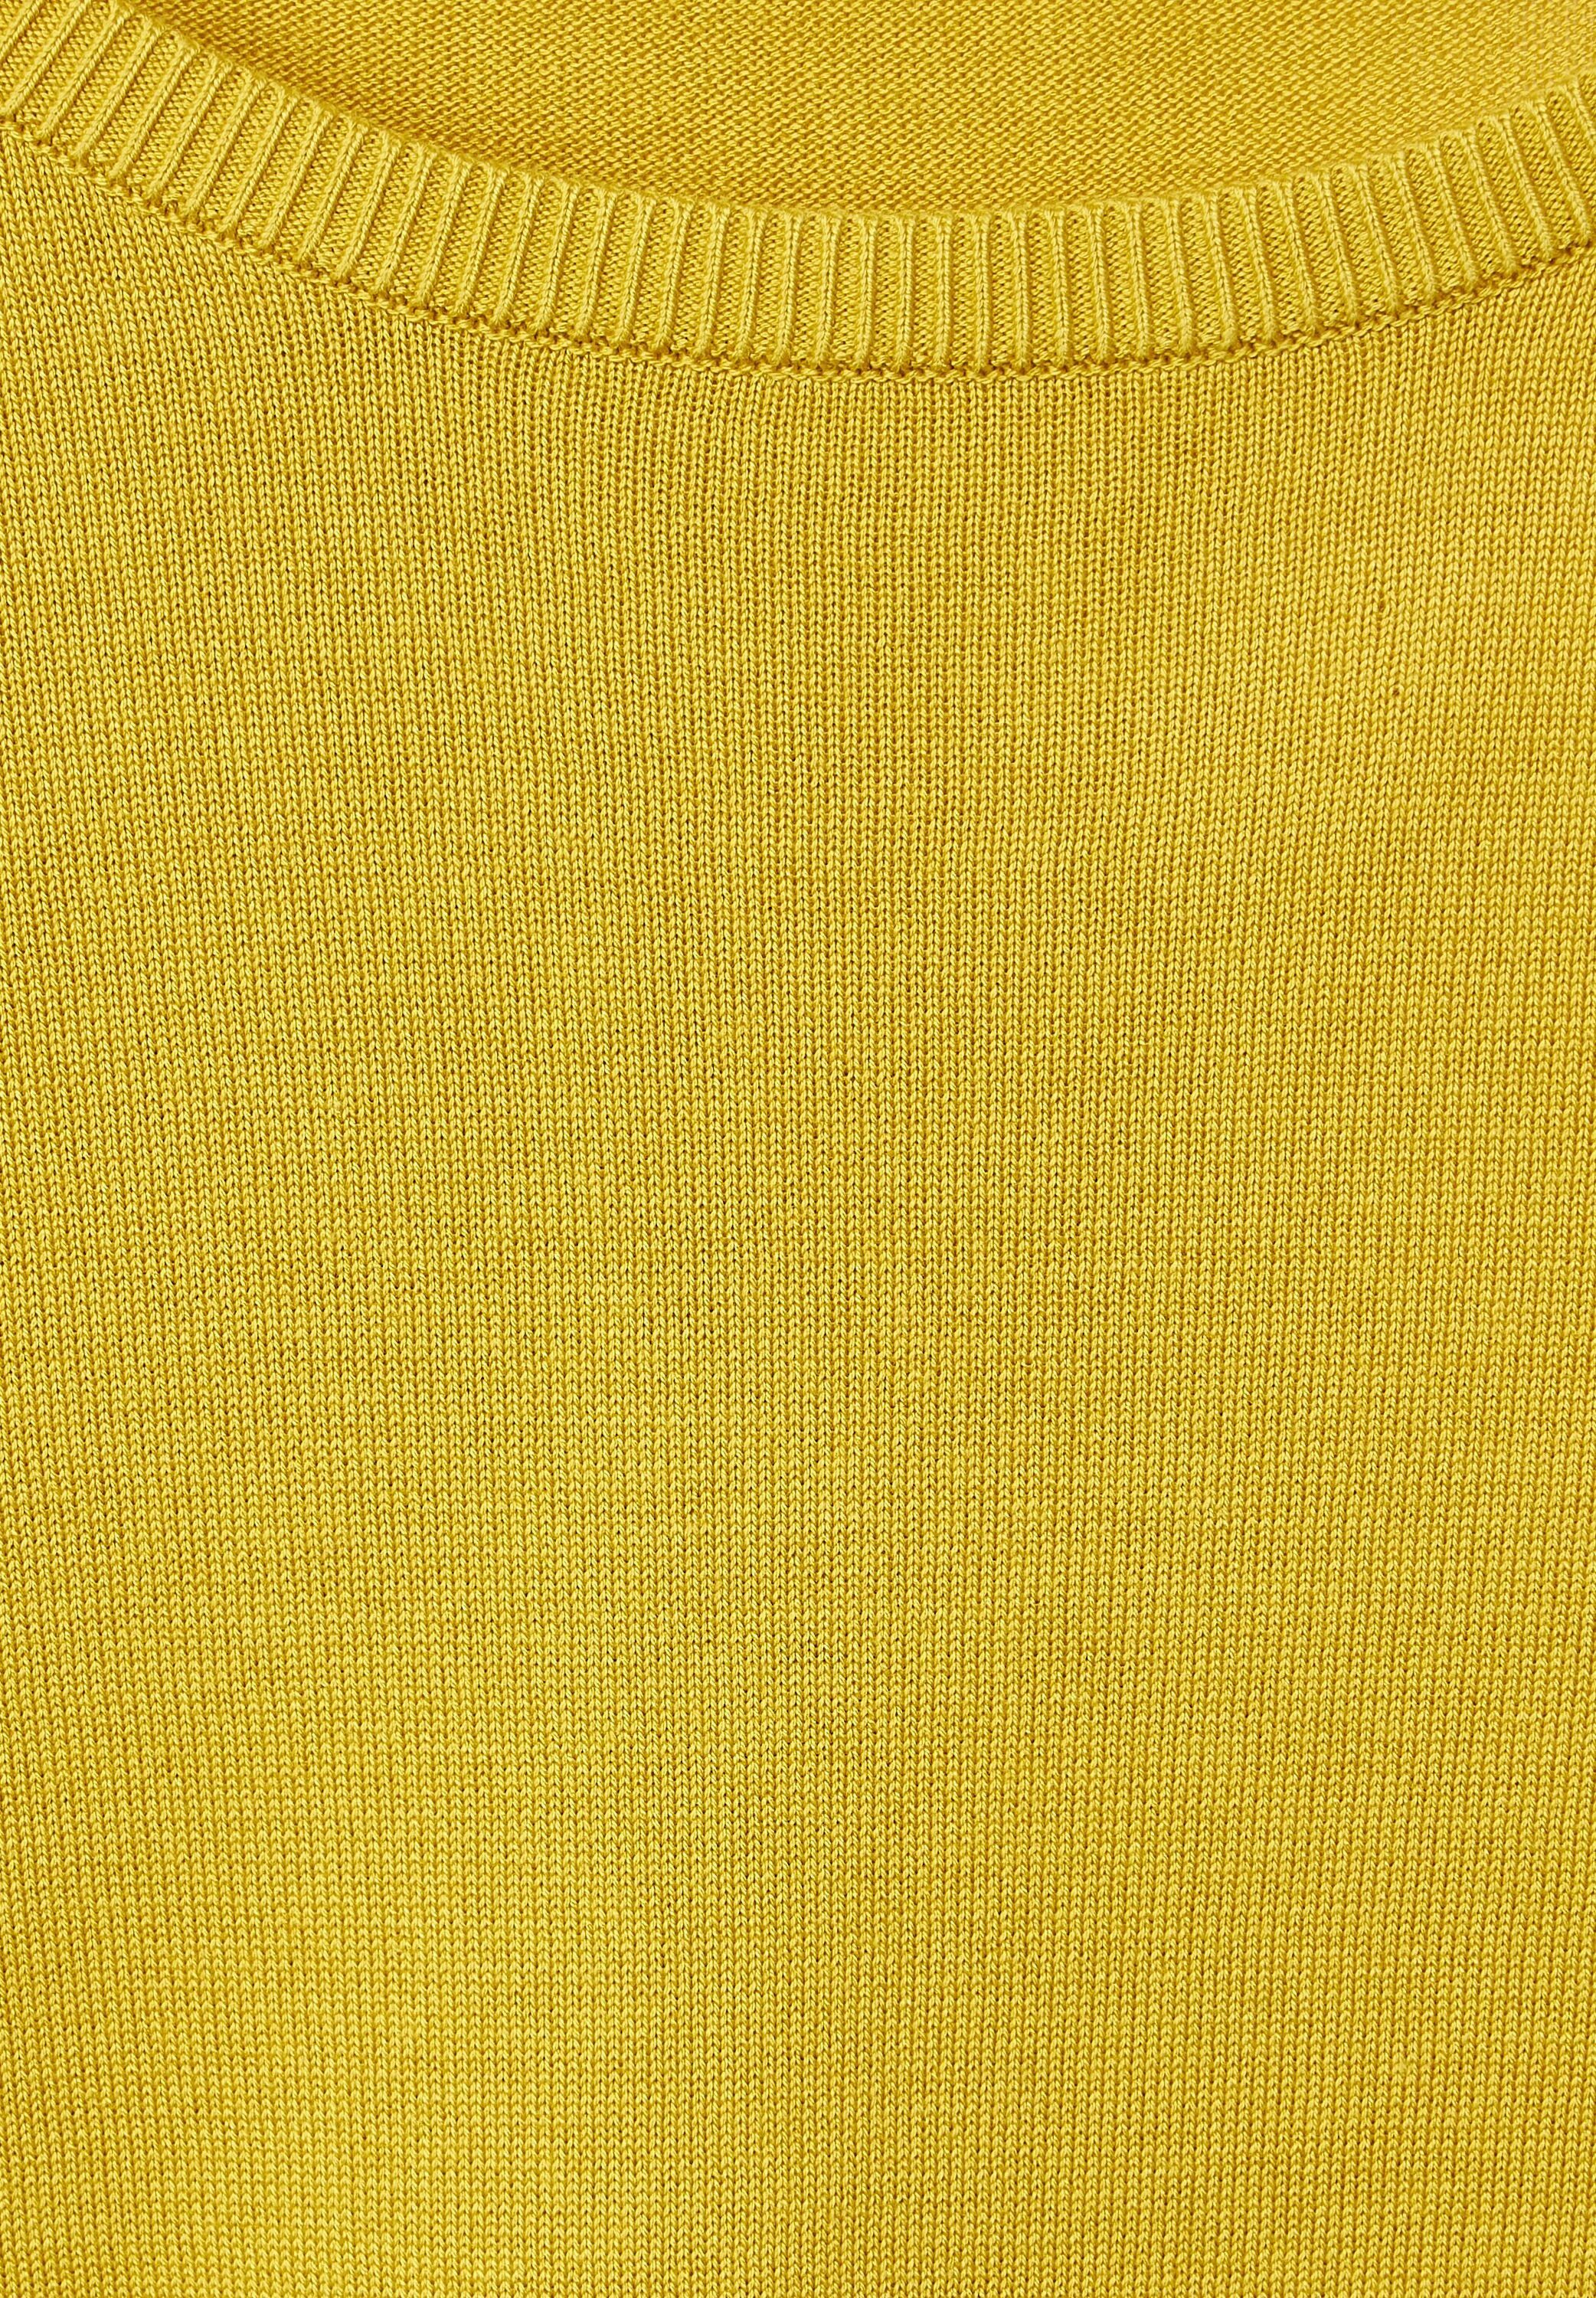 Unifarbe golden Cecil yellow in Rundhalspullover